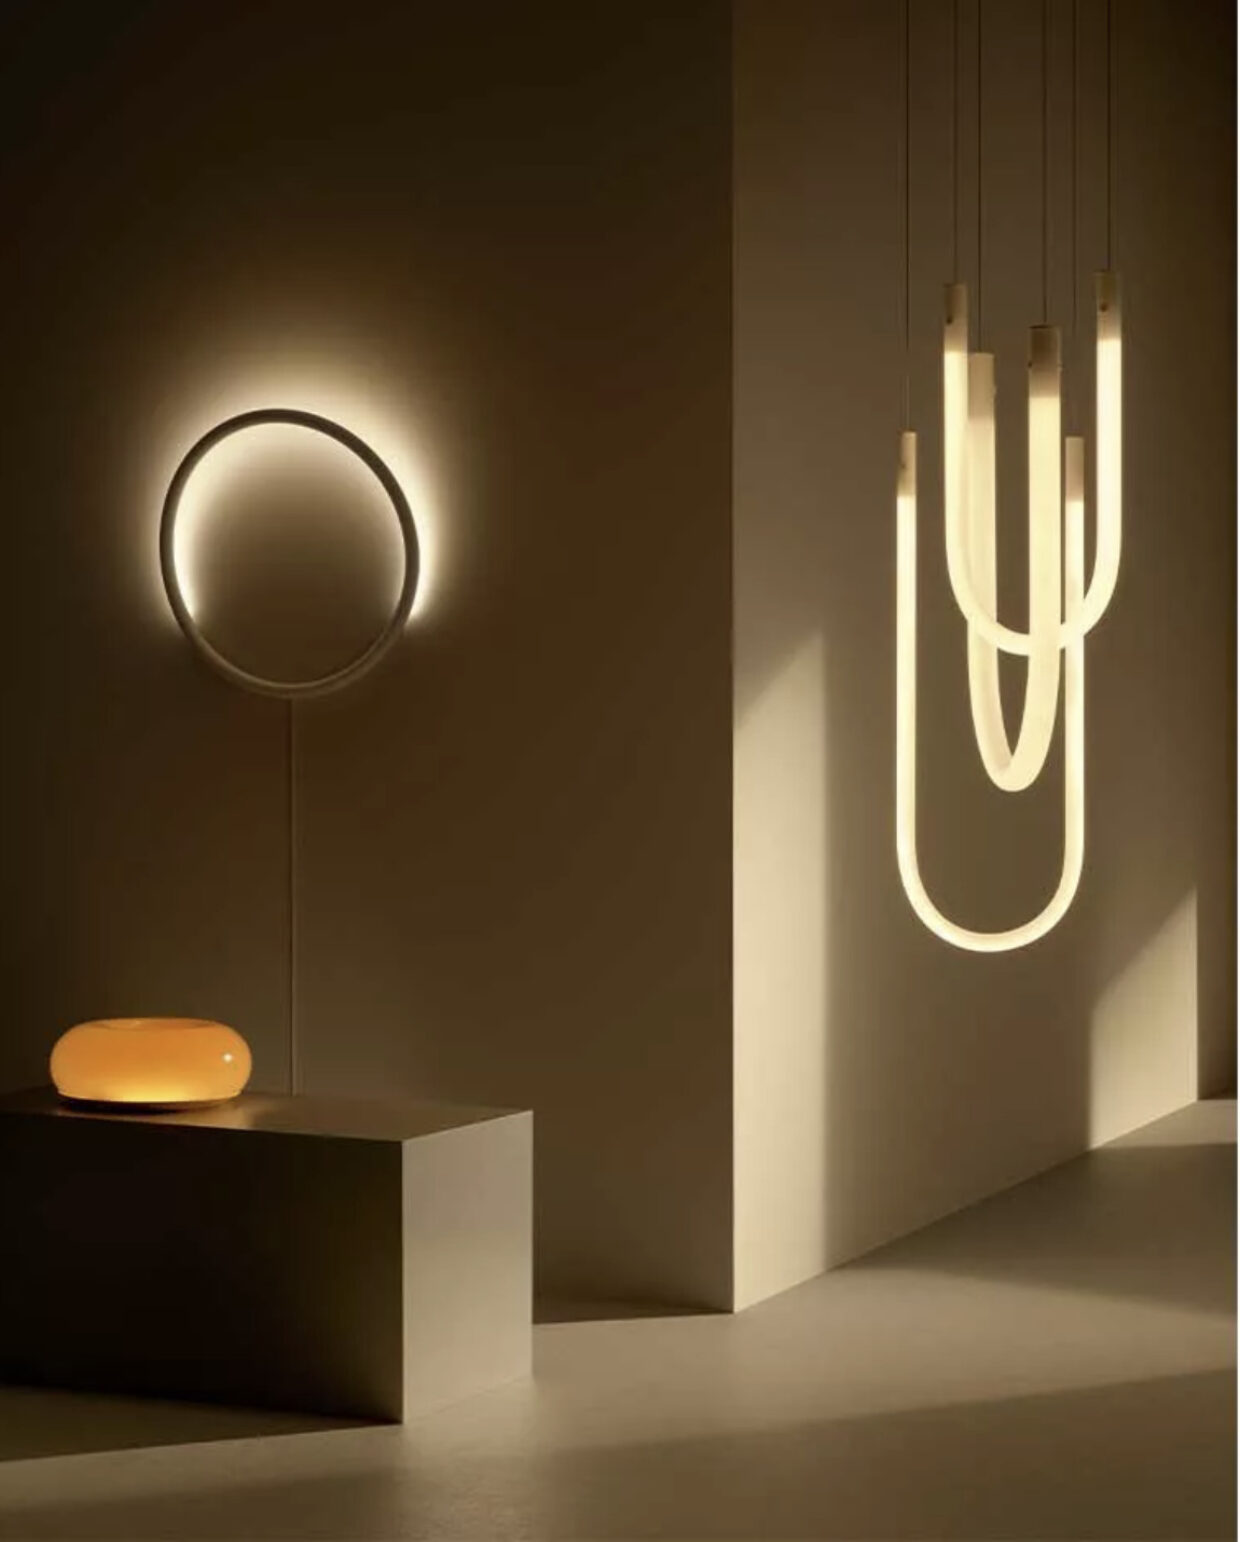 Ikea and Sabine Marcelis present luminous new collaboration | 2